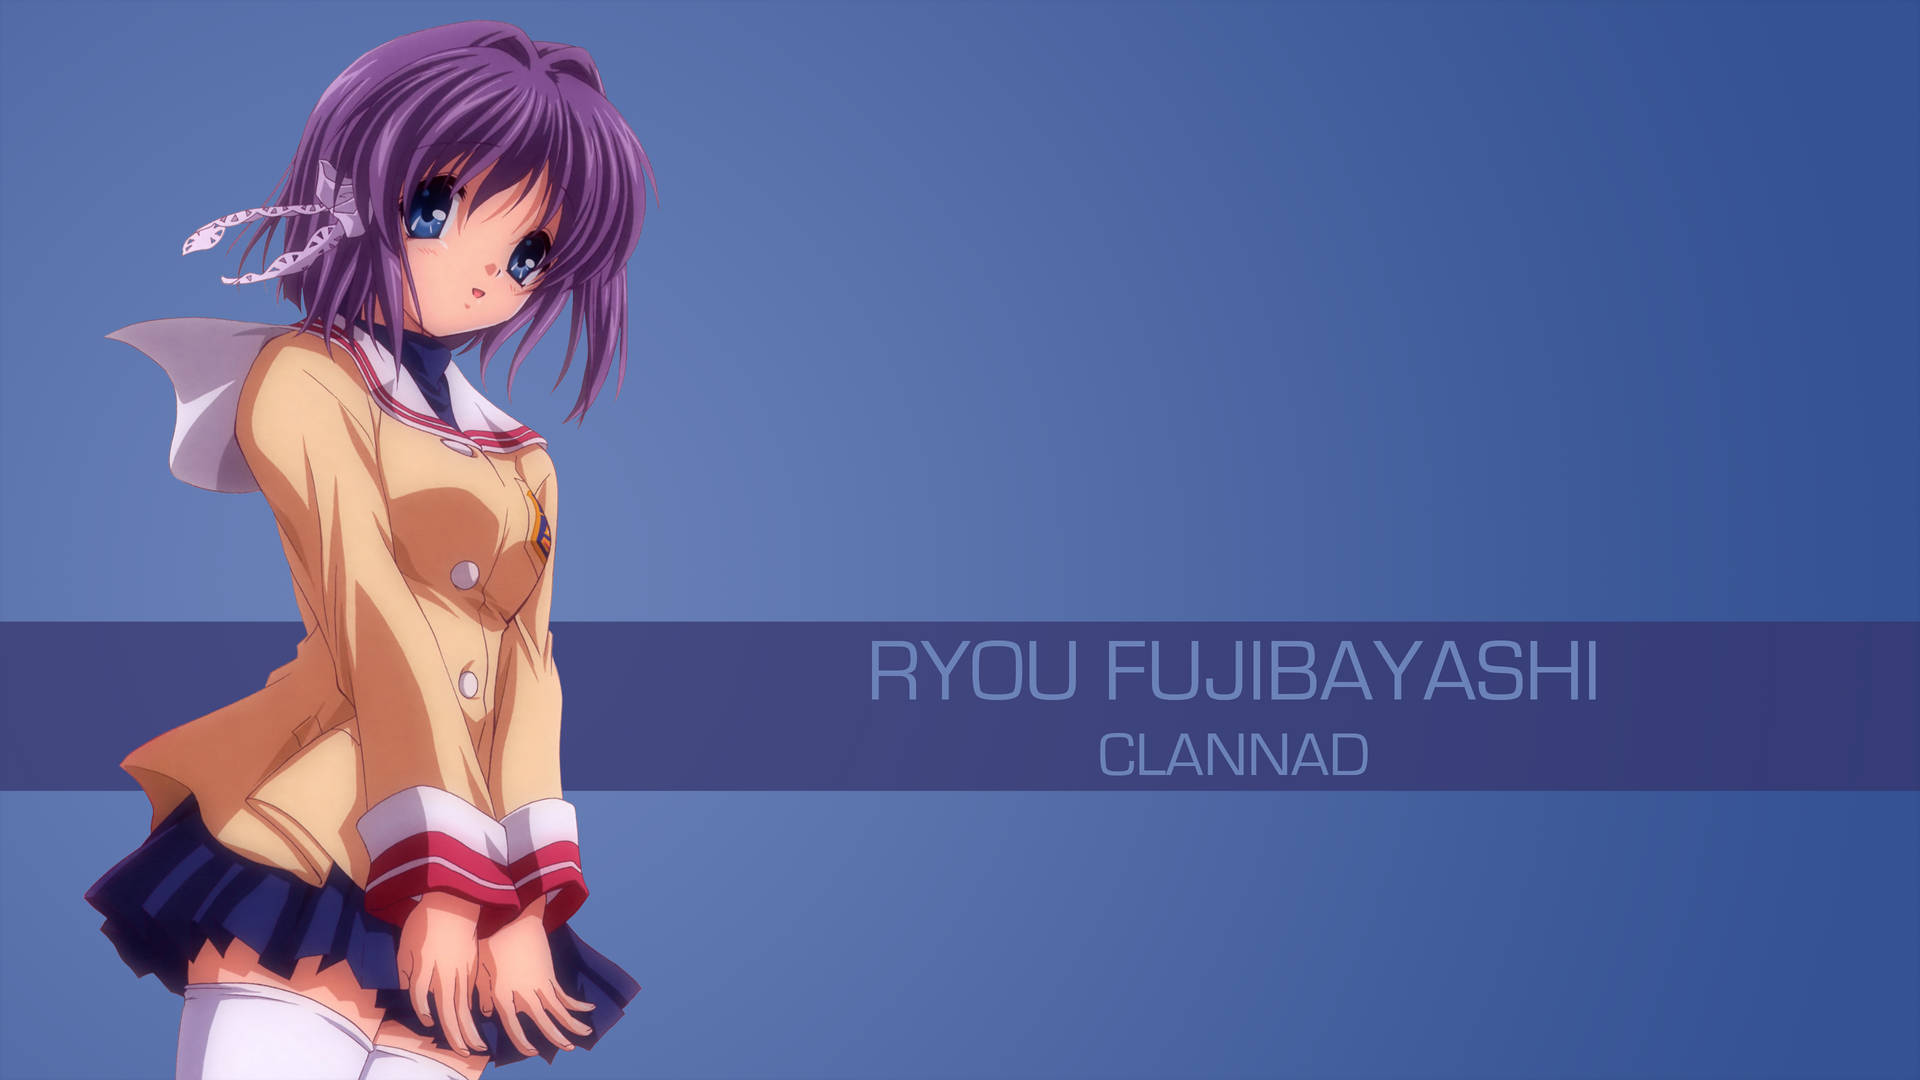 Clannad Ryou Fujibayashi Background